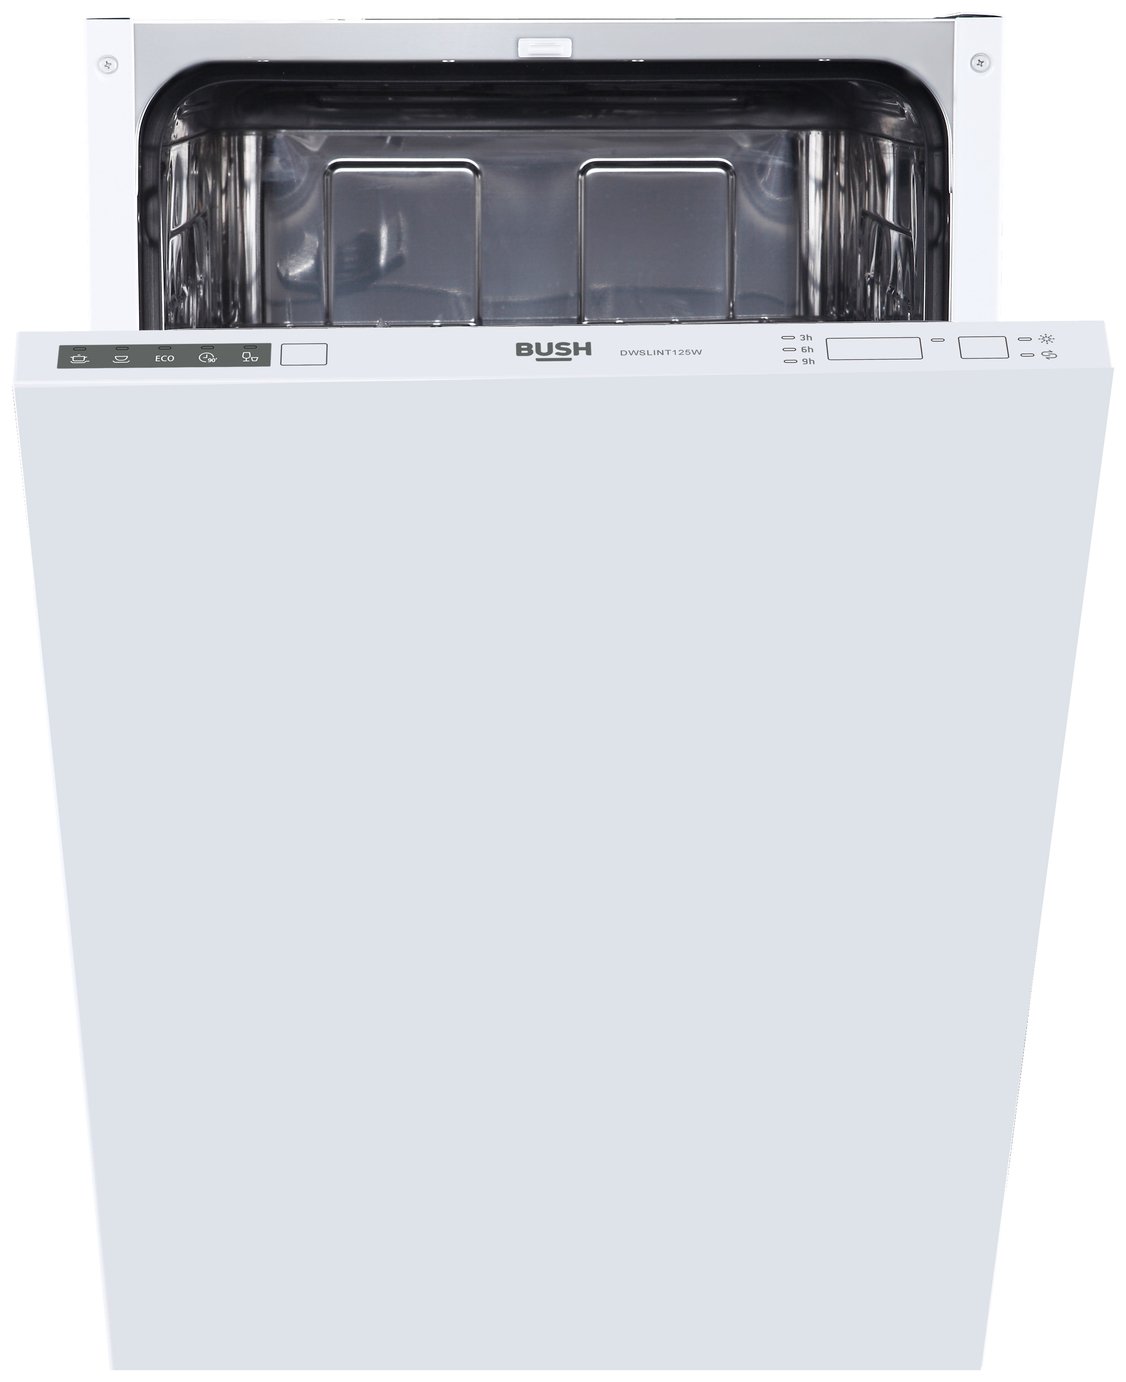 Bush DWSLINT125W Slimline Integrated Dishwasher review